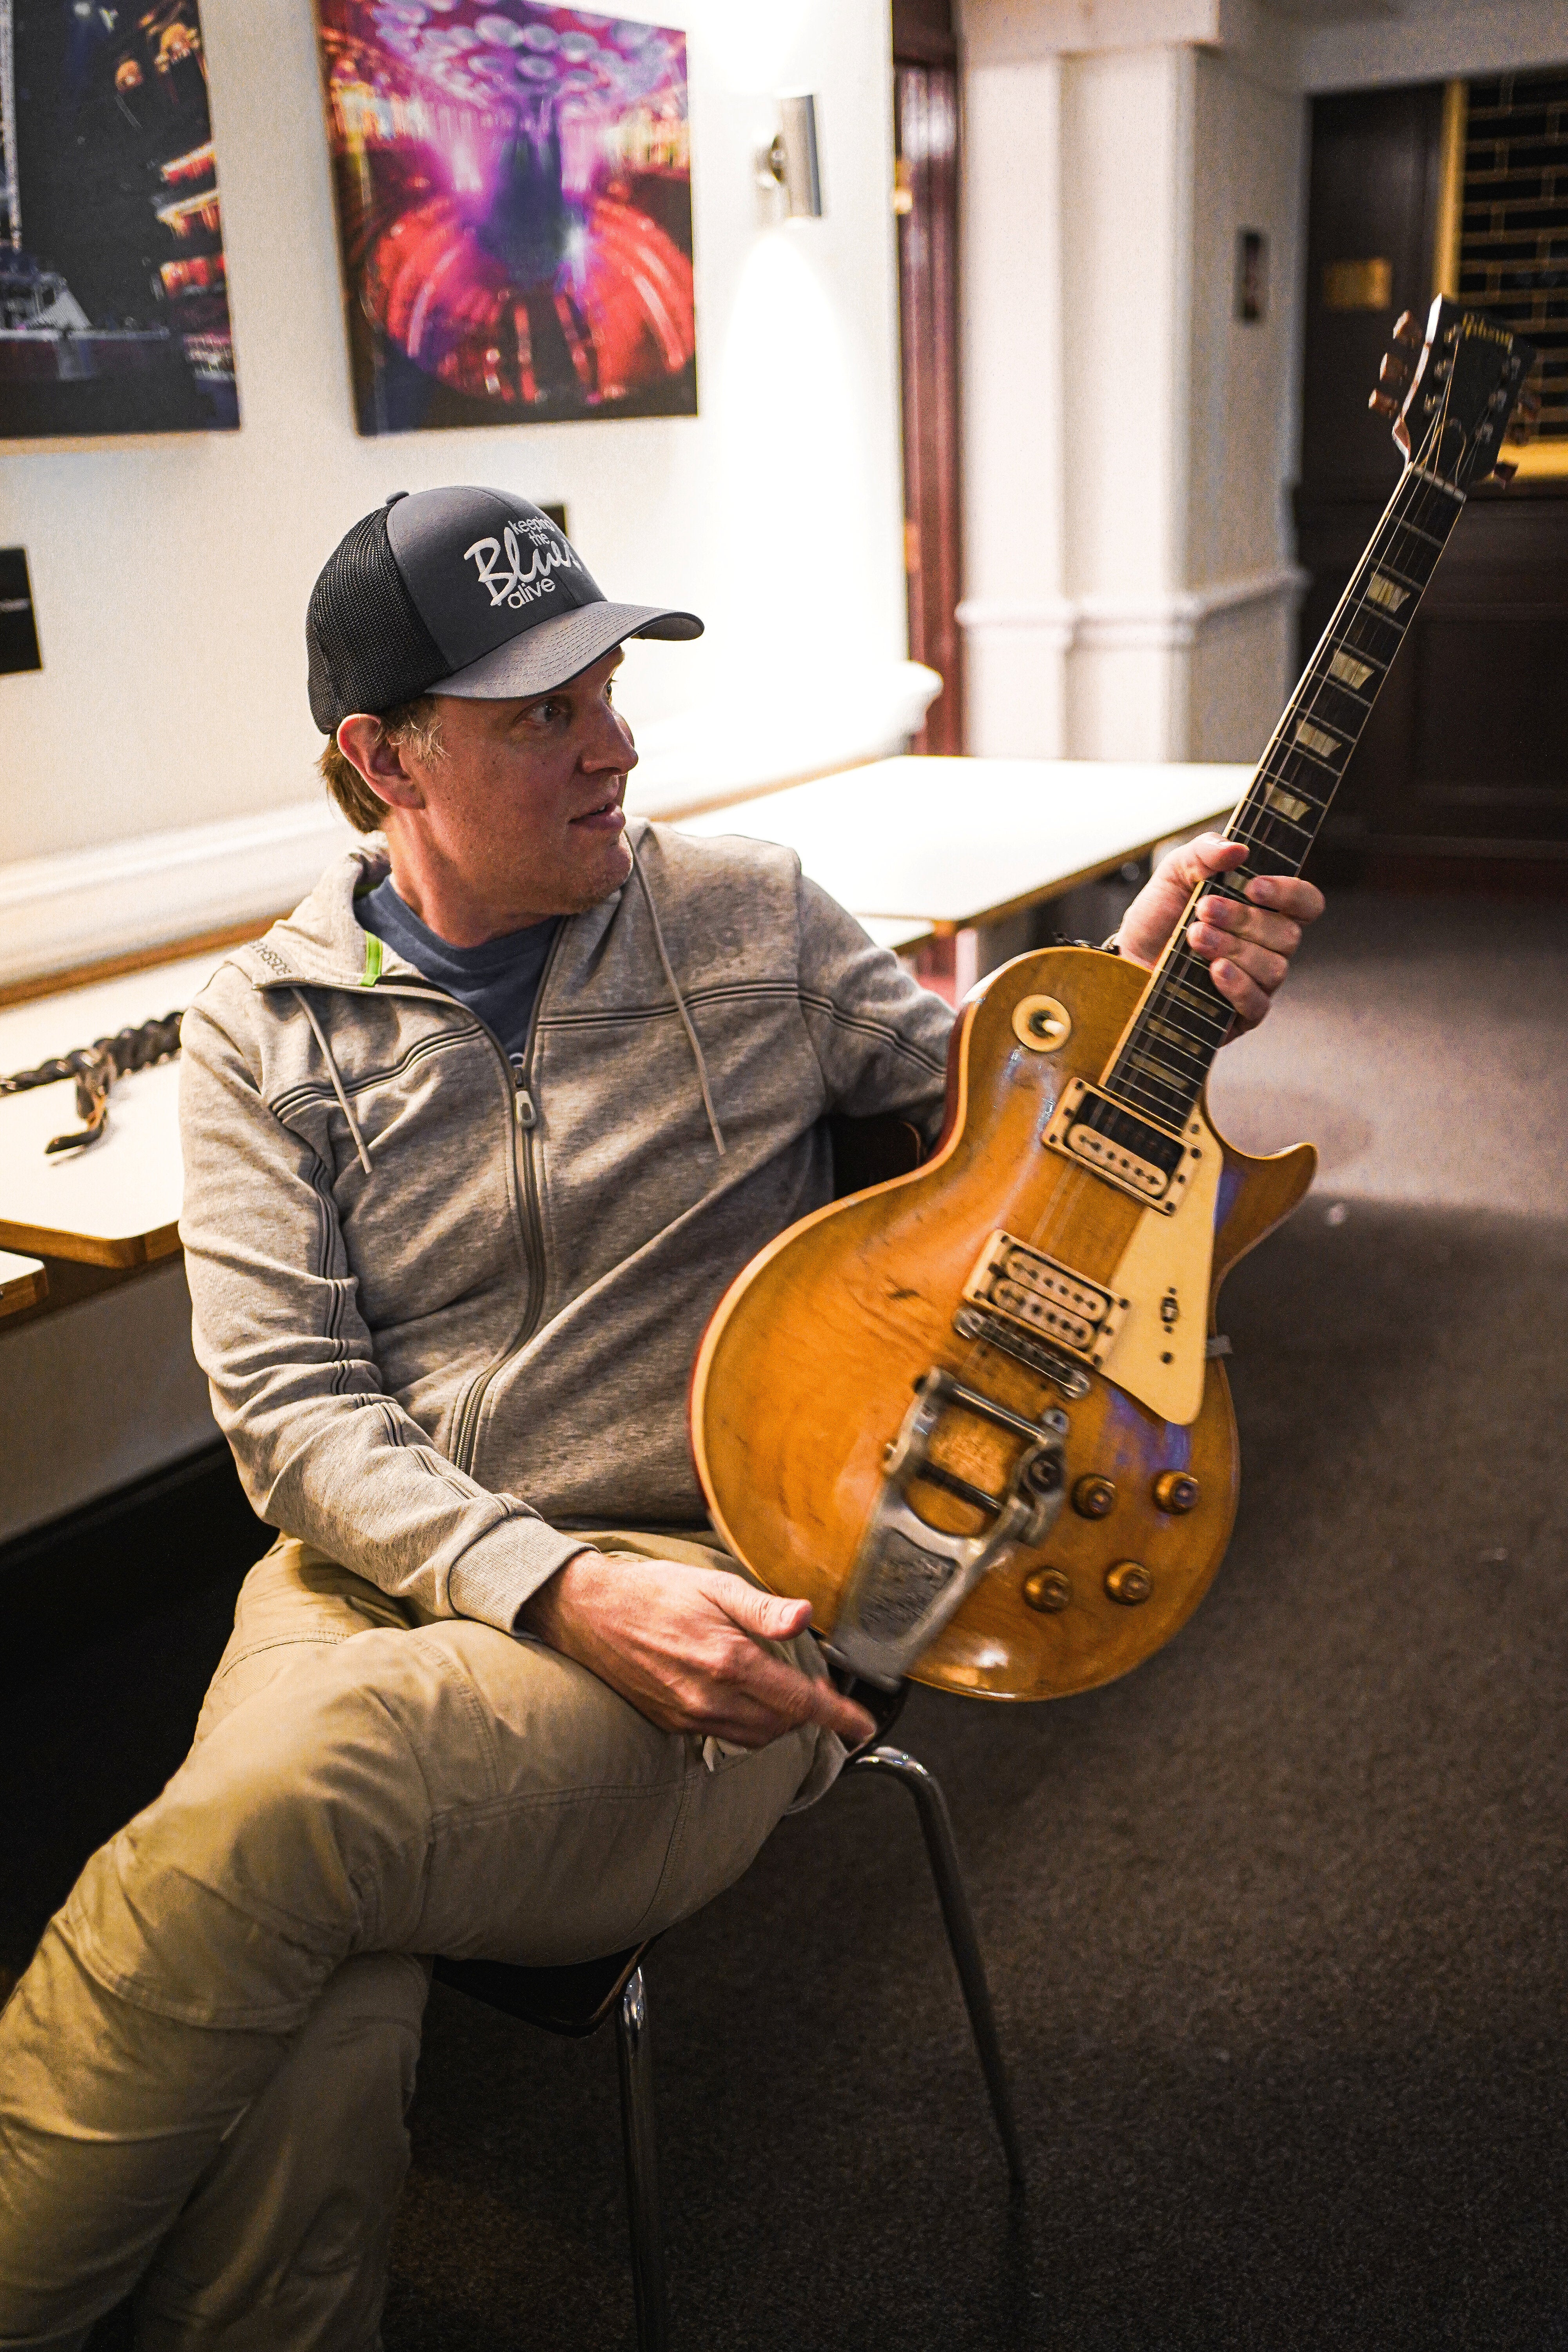 American artist Joe Bonamassa with his newly purchased Gibson Les Paul